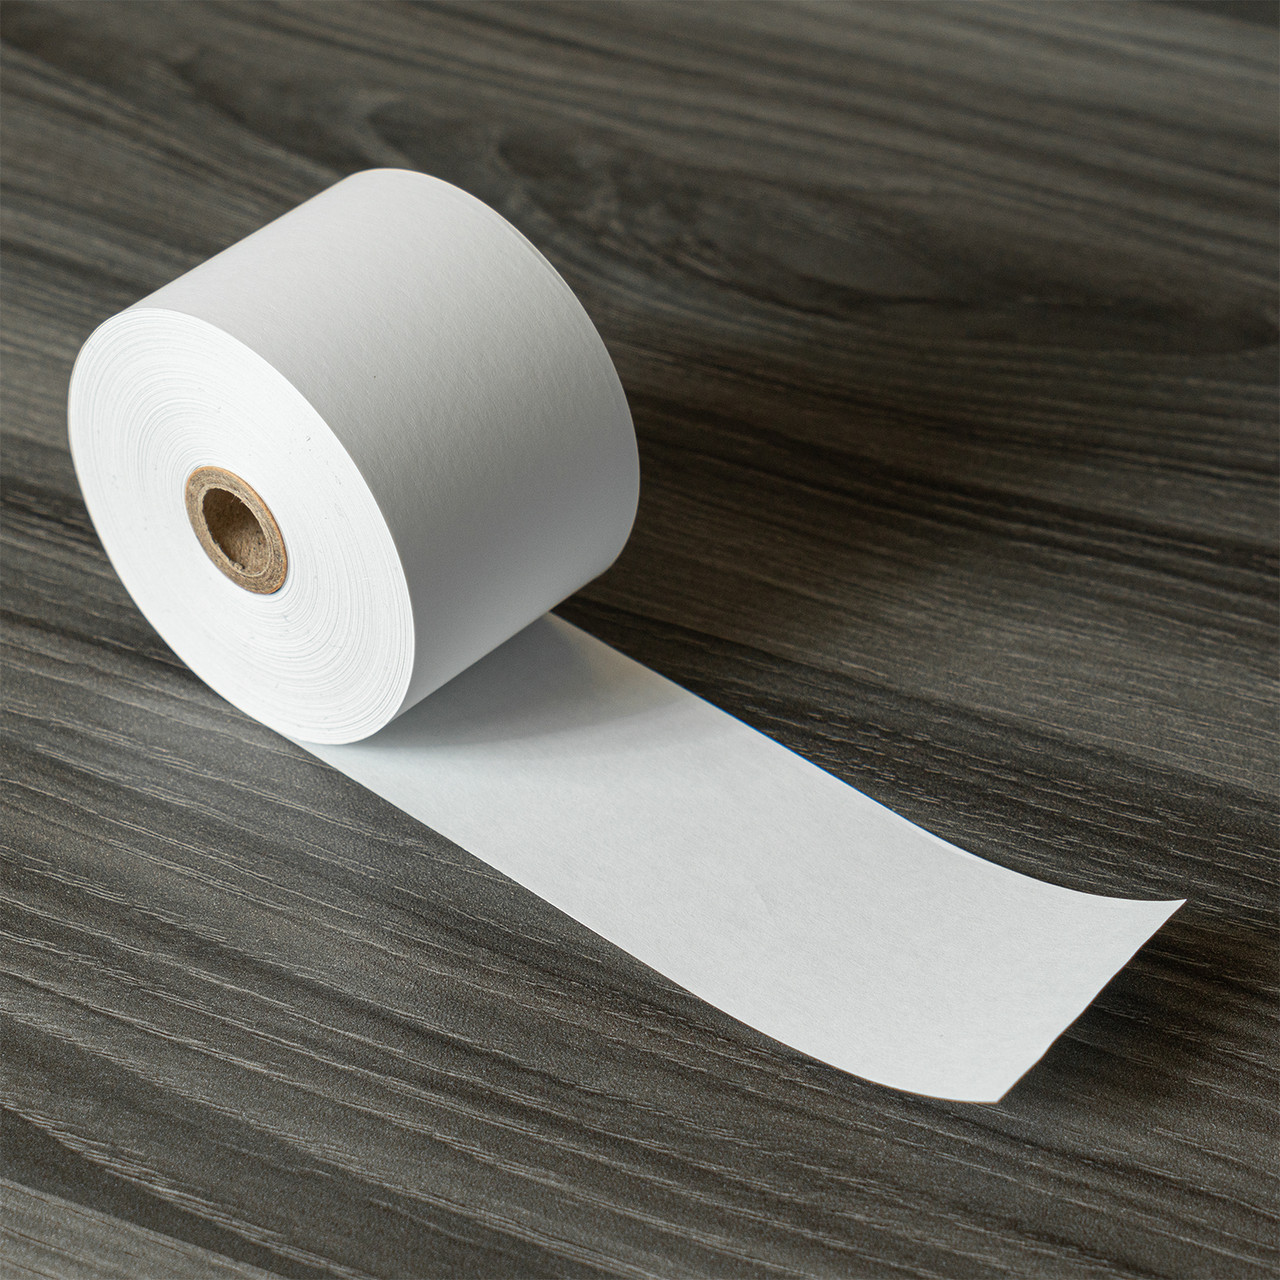 Thermal Paper Rolls, Carbonless Paper Rolls, Receipt Paper